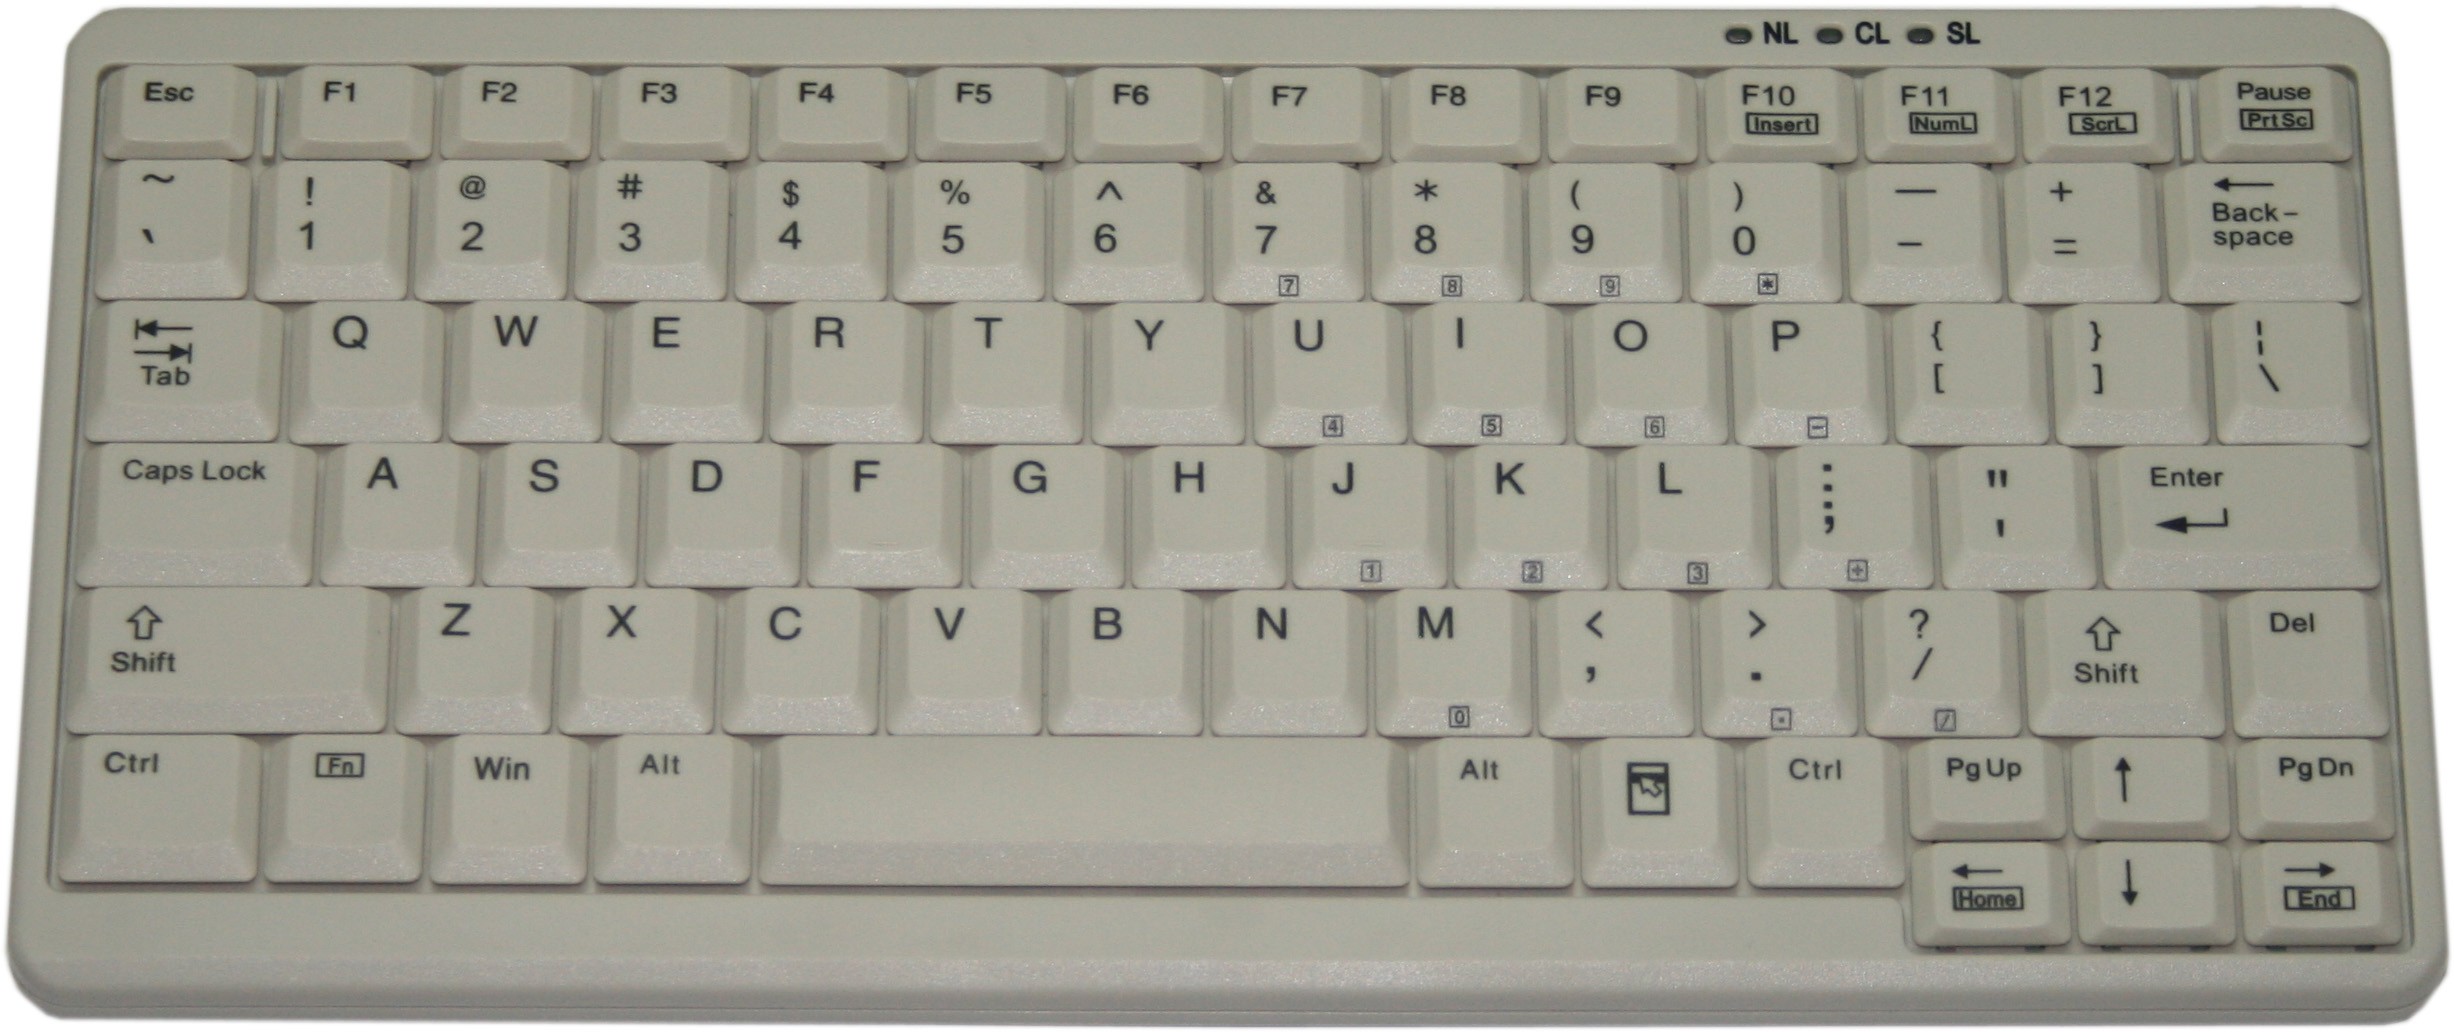 Industry 4.0 Mini Notebook Style Keyboard USB White, Italian layout